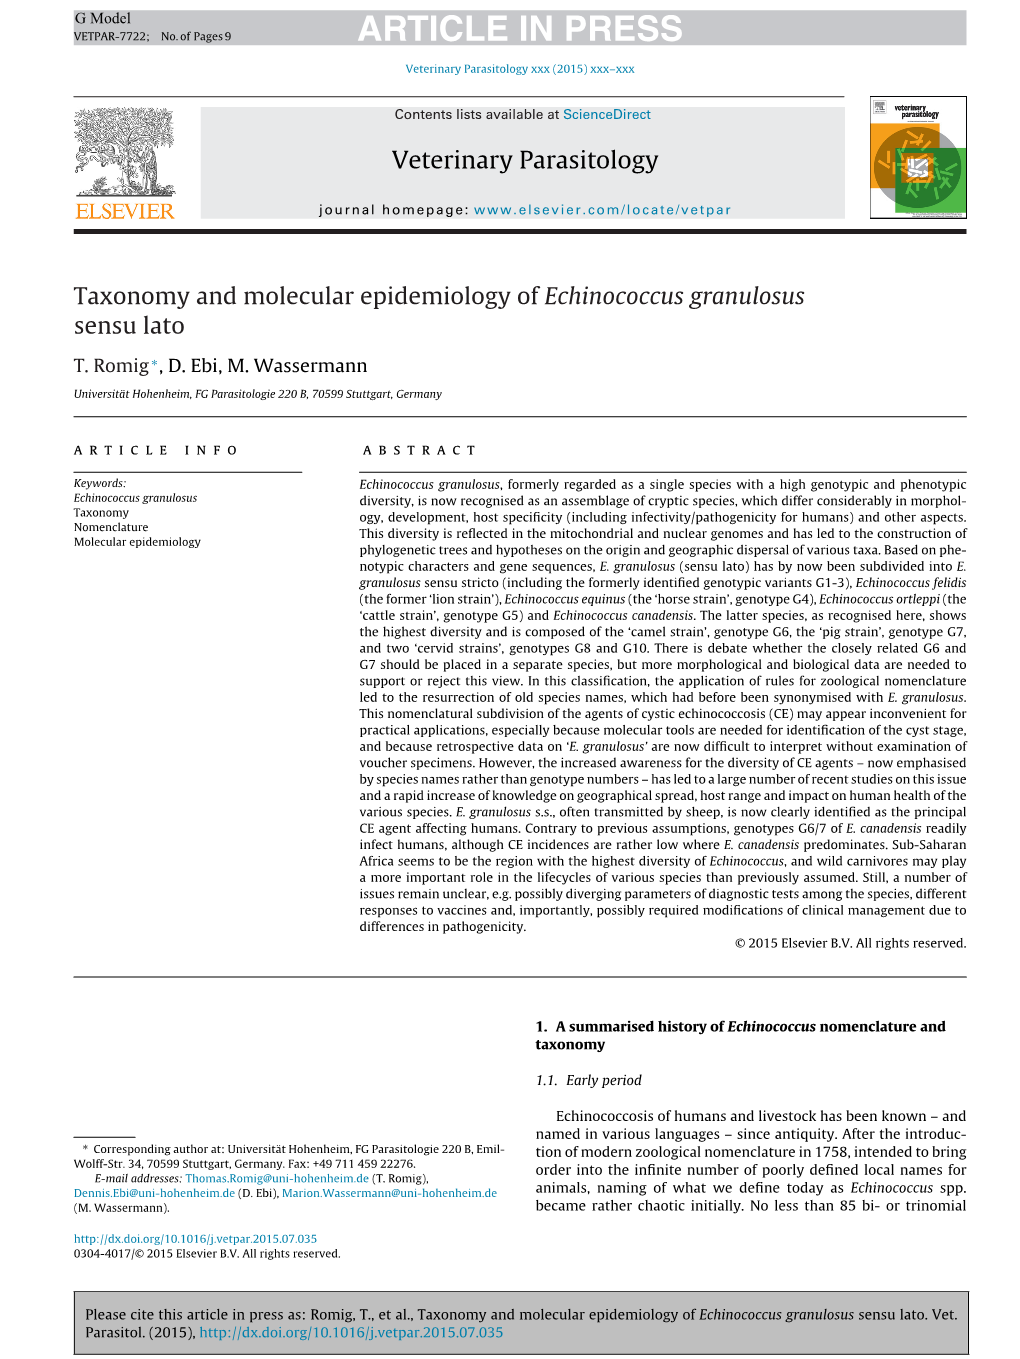 Taxonomy and Molecular Epidemiology of Echinococcus Granulosus